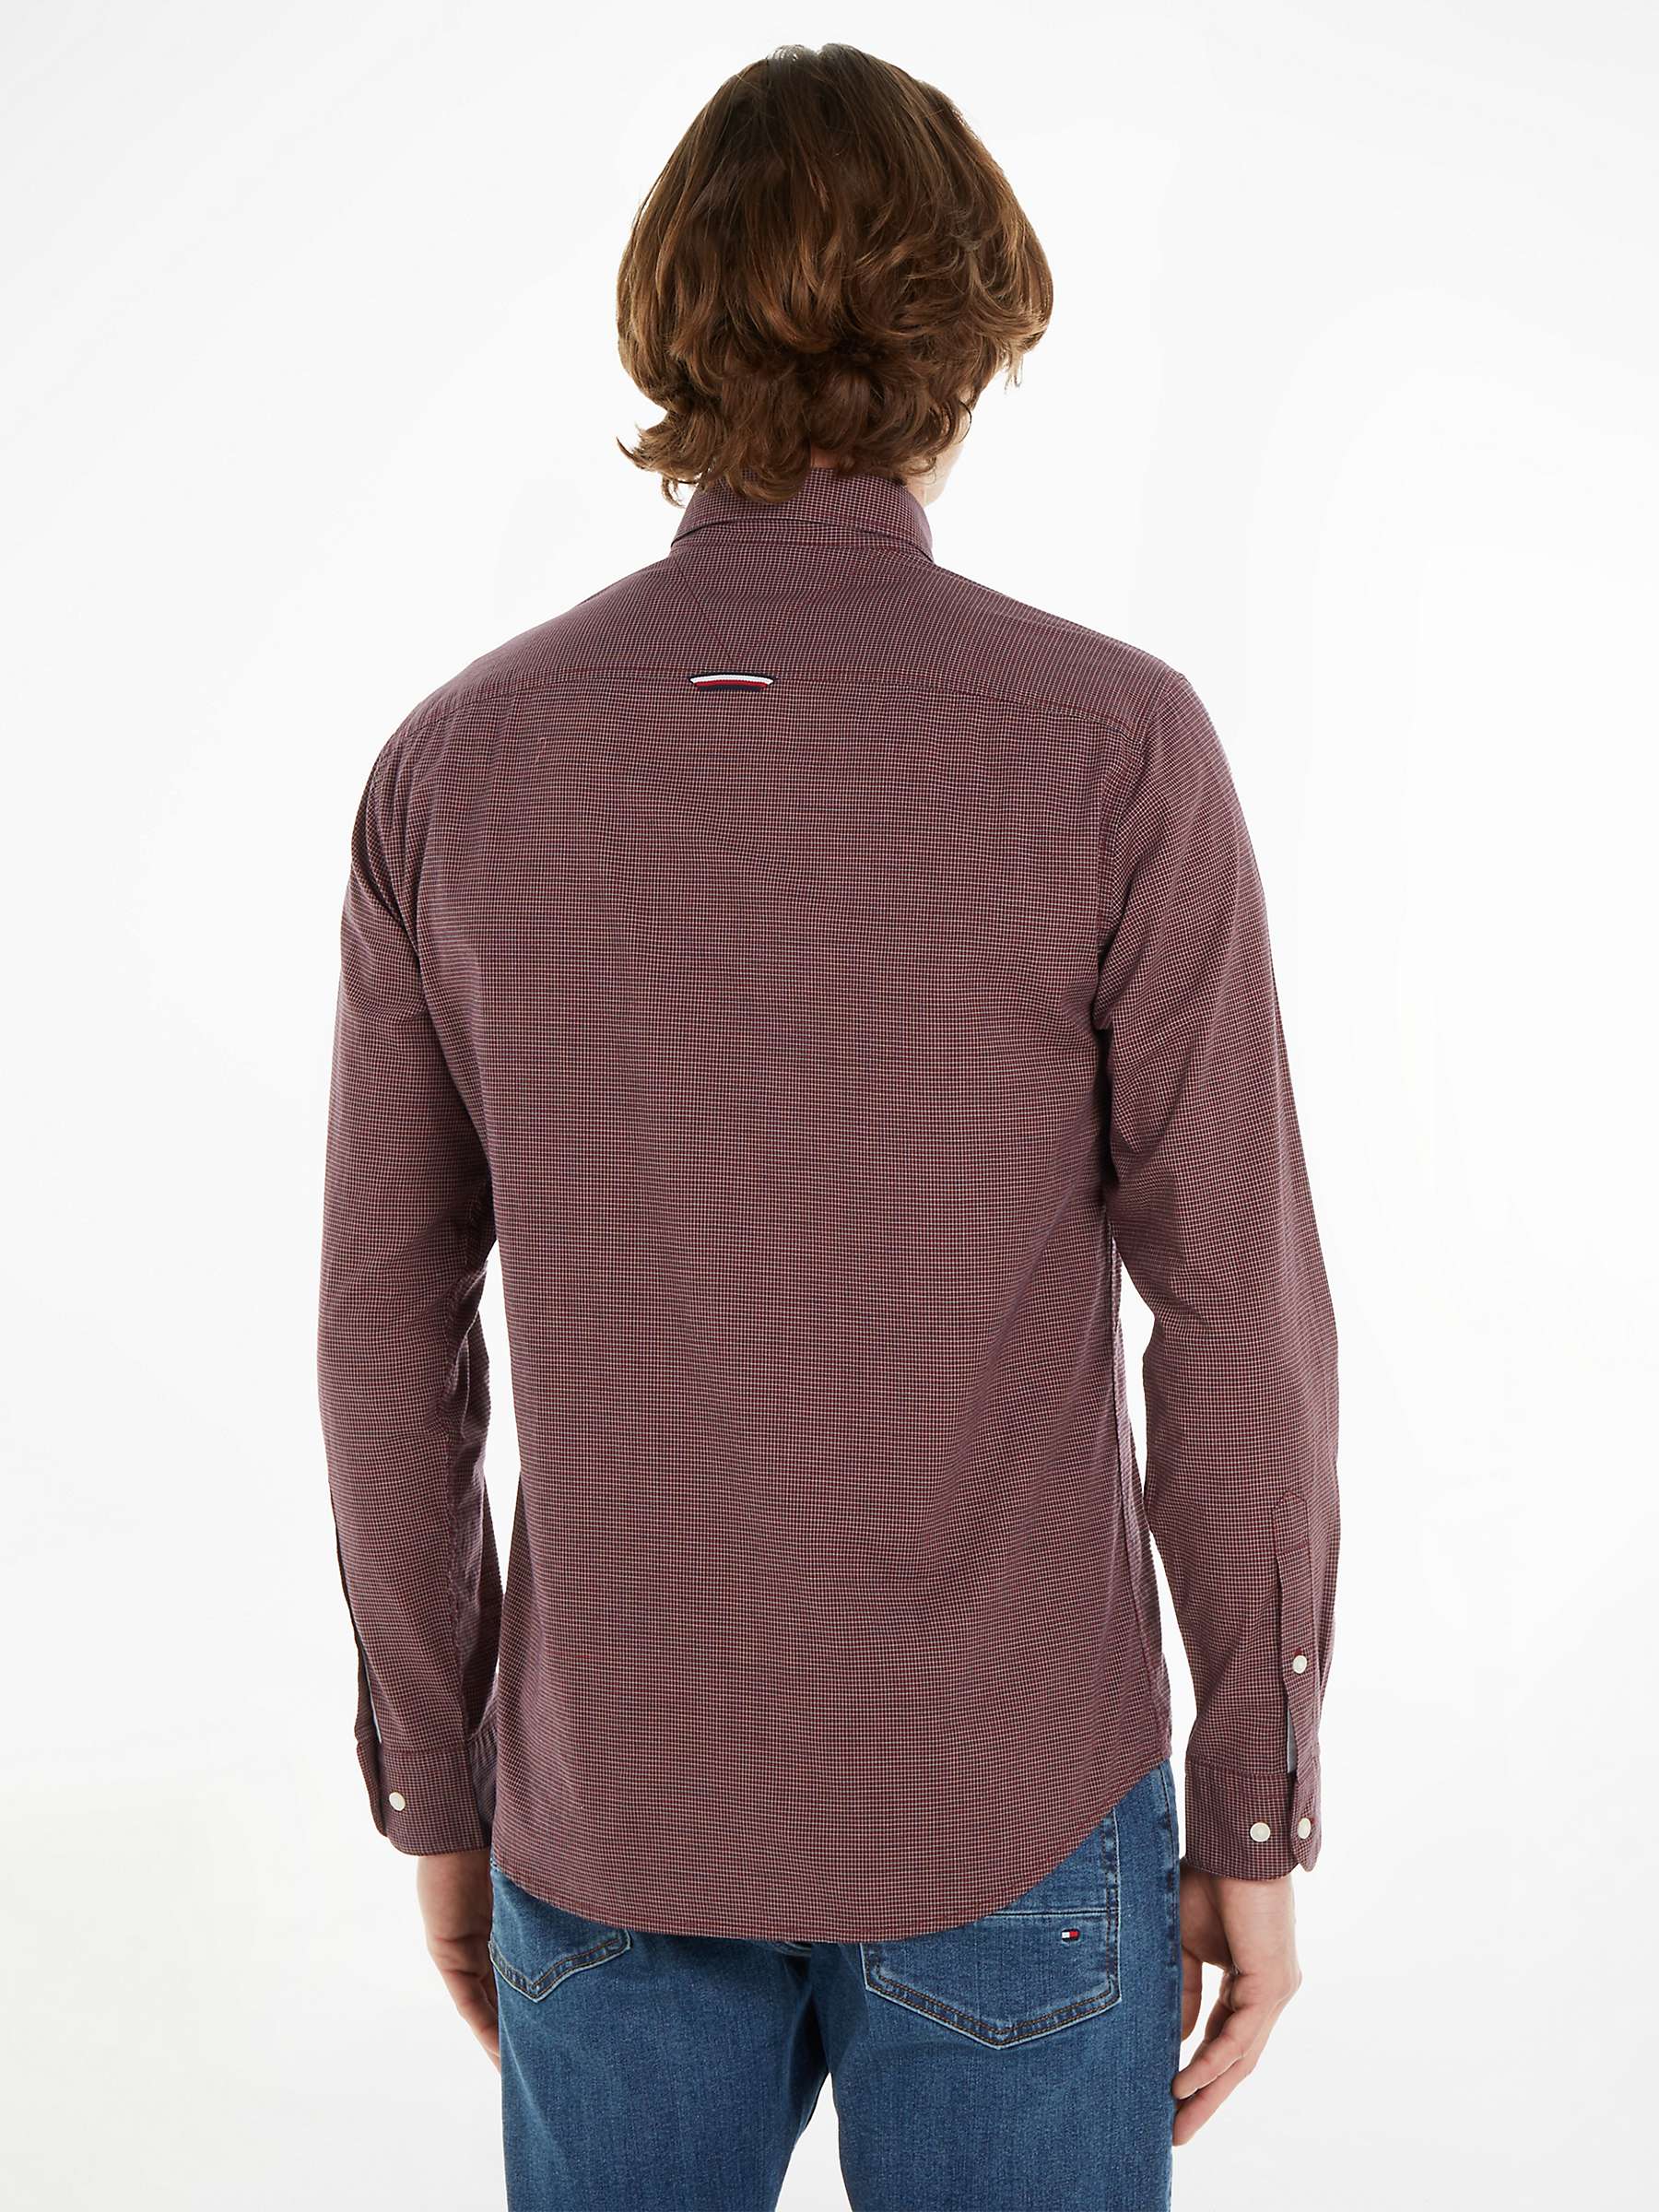 Buy Tommy Hilfiger Houndstooth Long Sleeve Shirt Online at johnlewis.com